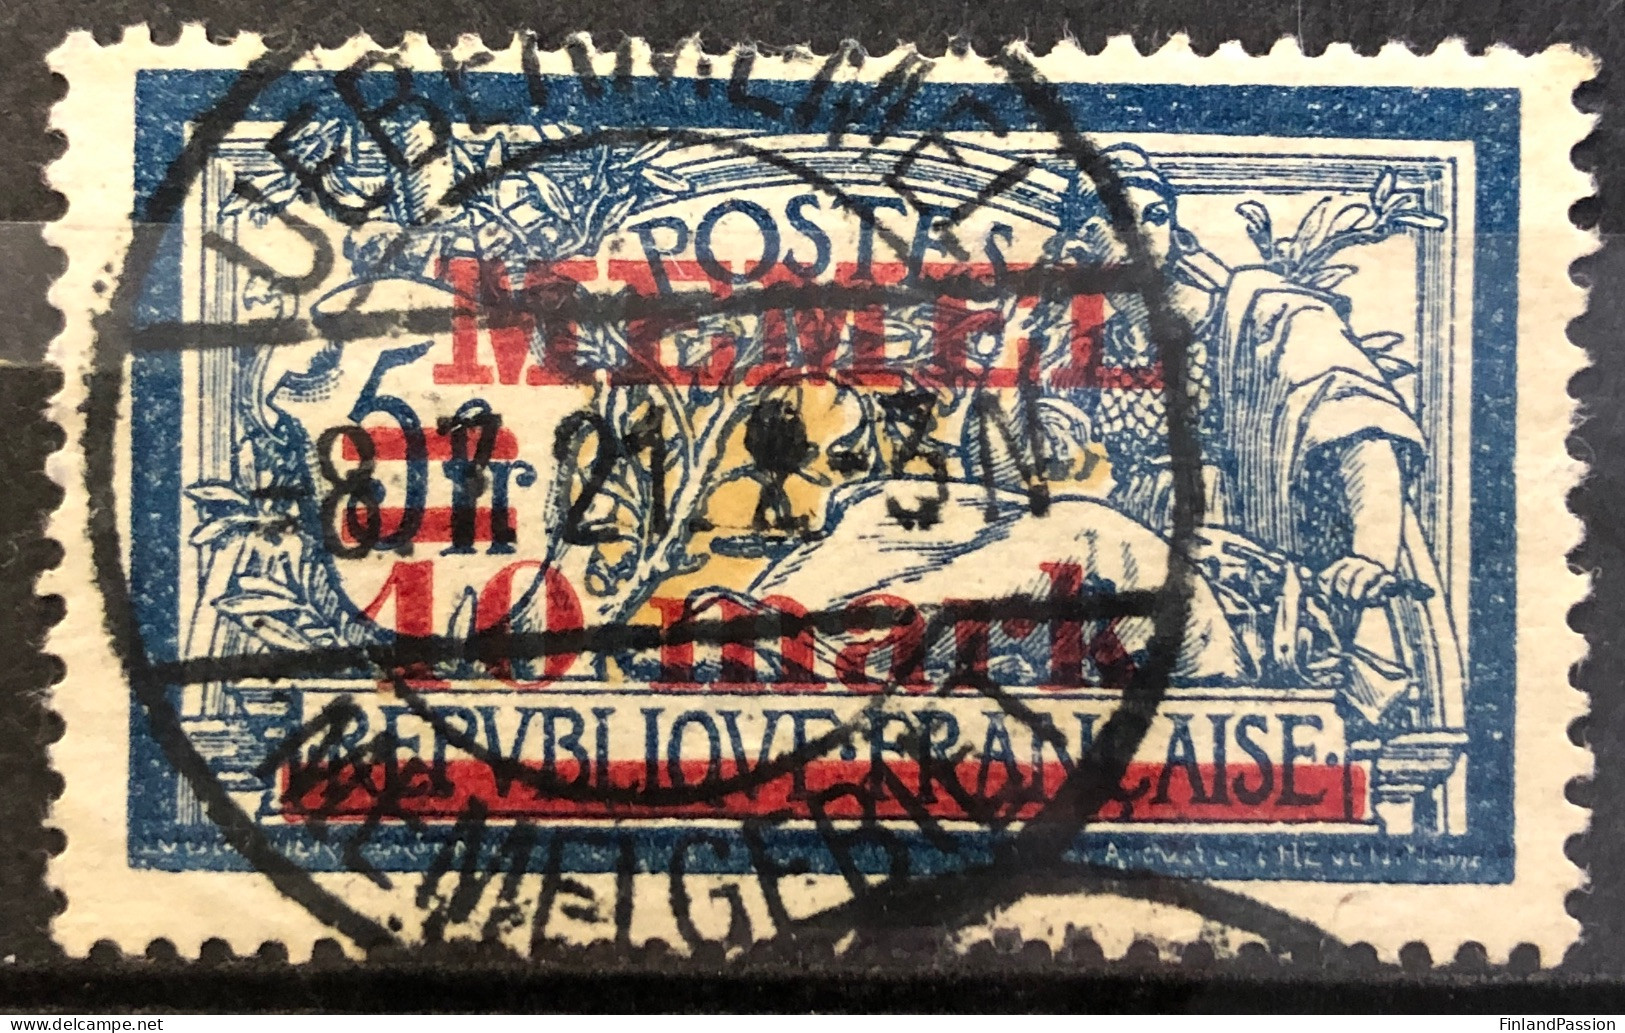 Memel. MiNr 32 O - Used Stamps